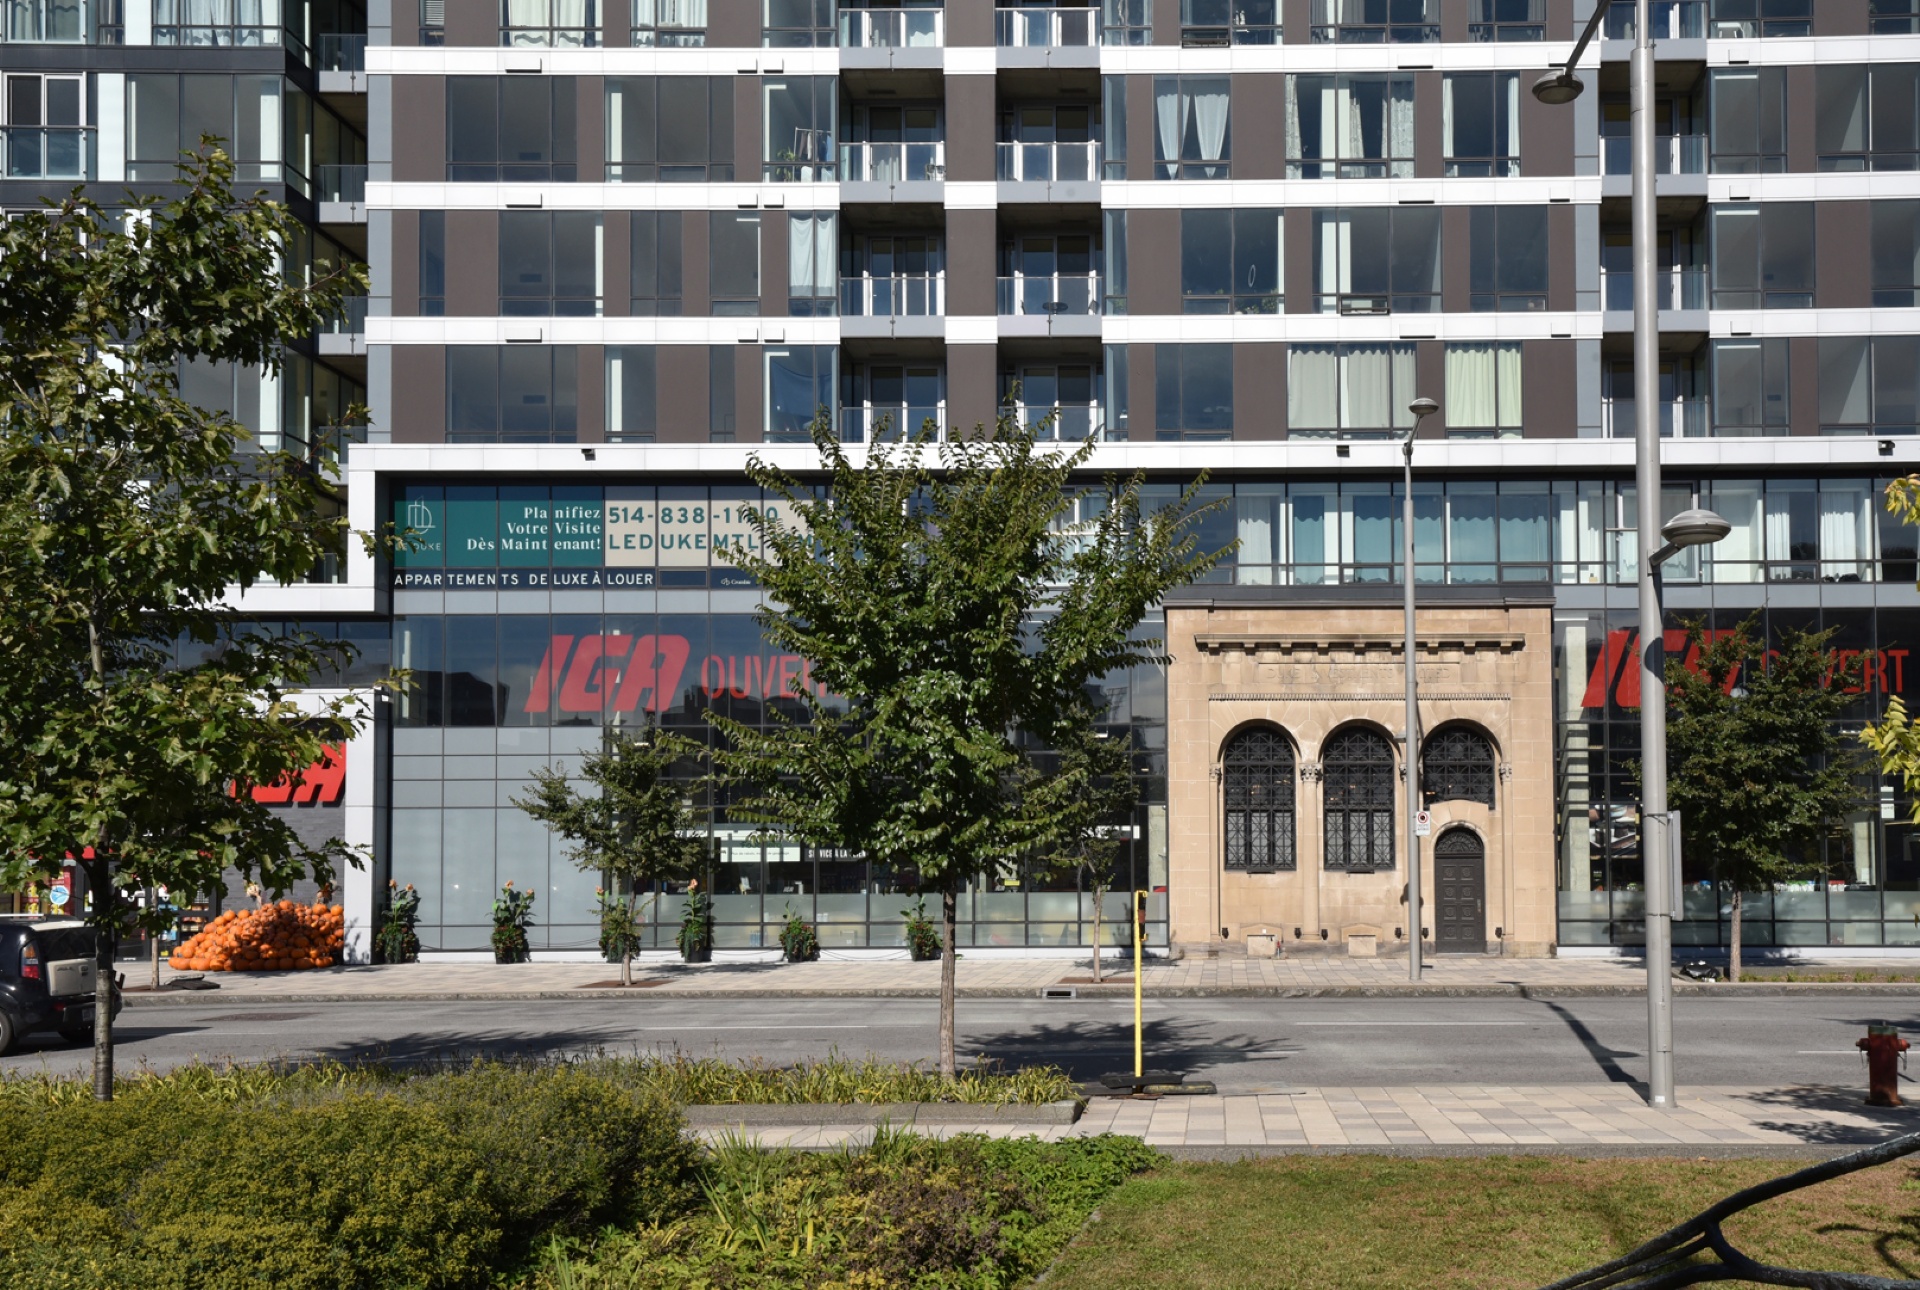 Le Duke | Architex Group | Montreal-based architectural design firm | Le Duke | Architectural design firm offering architectural project programming, architectural design & implementation based in Montreal.